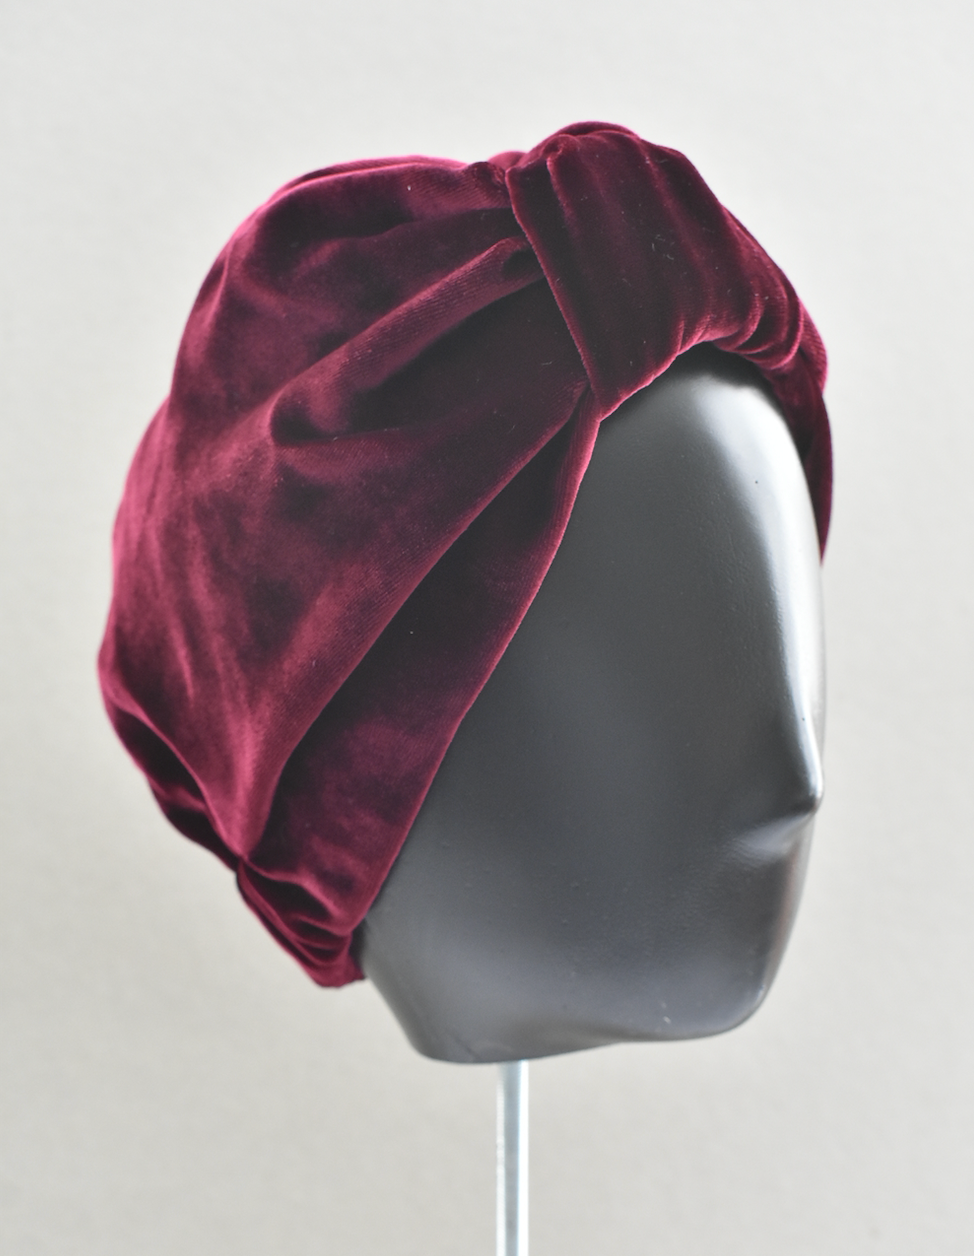 Luxury silk-velvet Turban & Head wrap -  Ruby and ox blood red